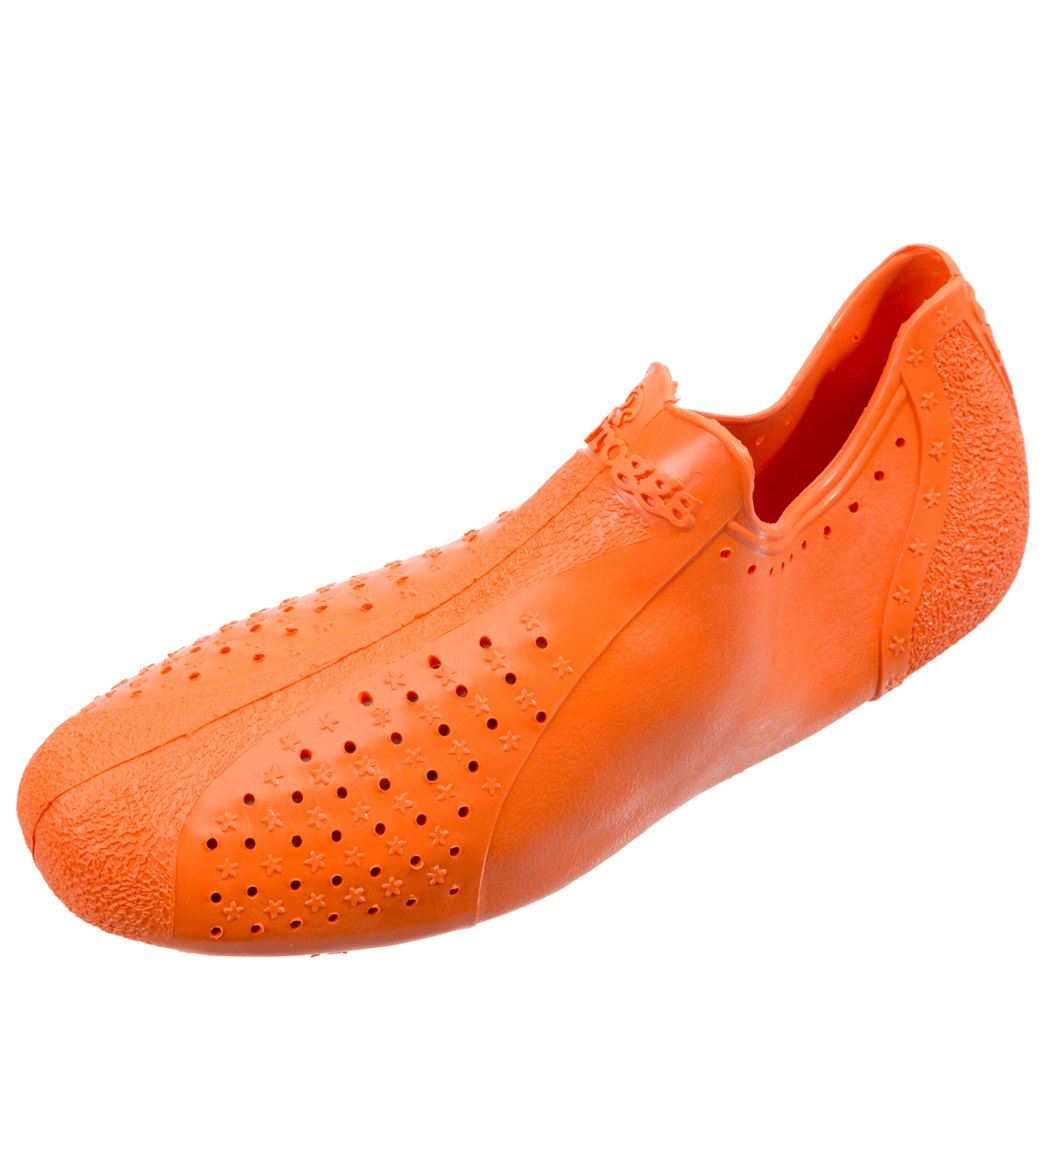 Okespor Froggs Shoes - Orange Y12/13 Euro 31/32 Rubber - Swimoutlet.com